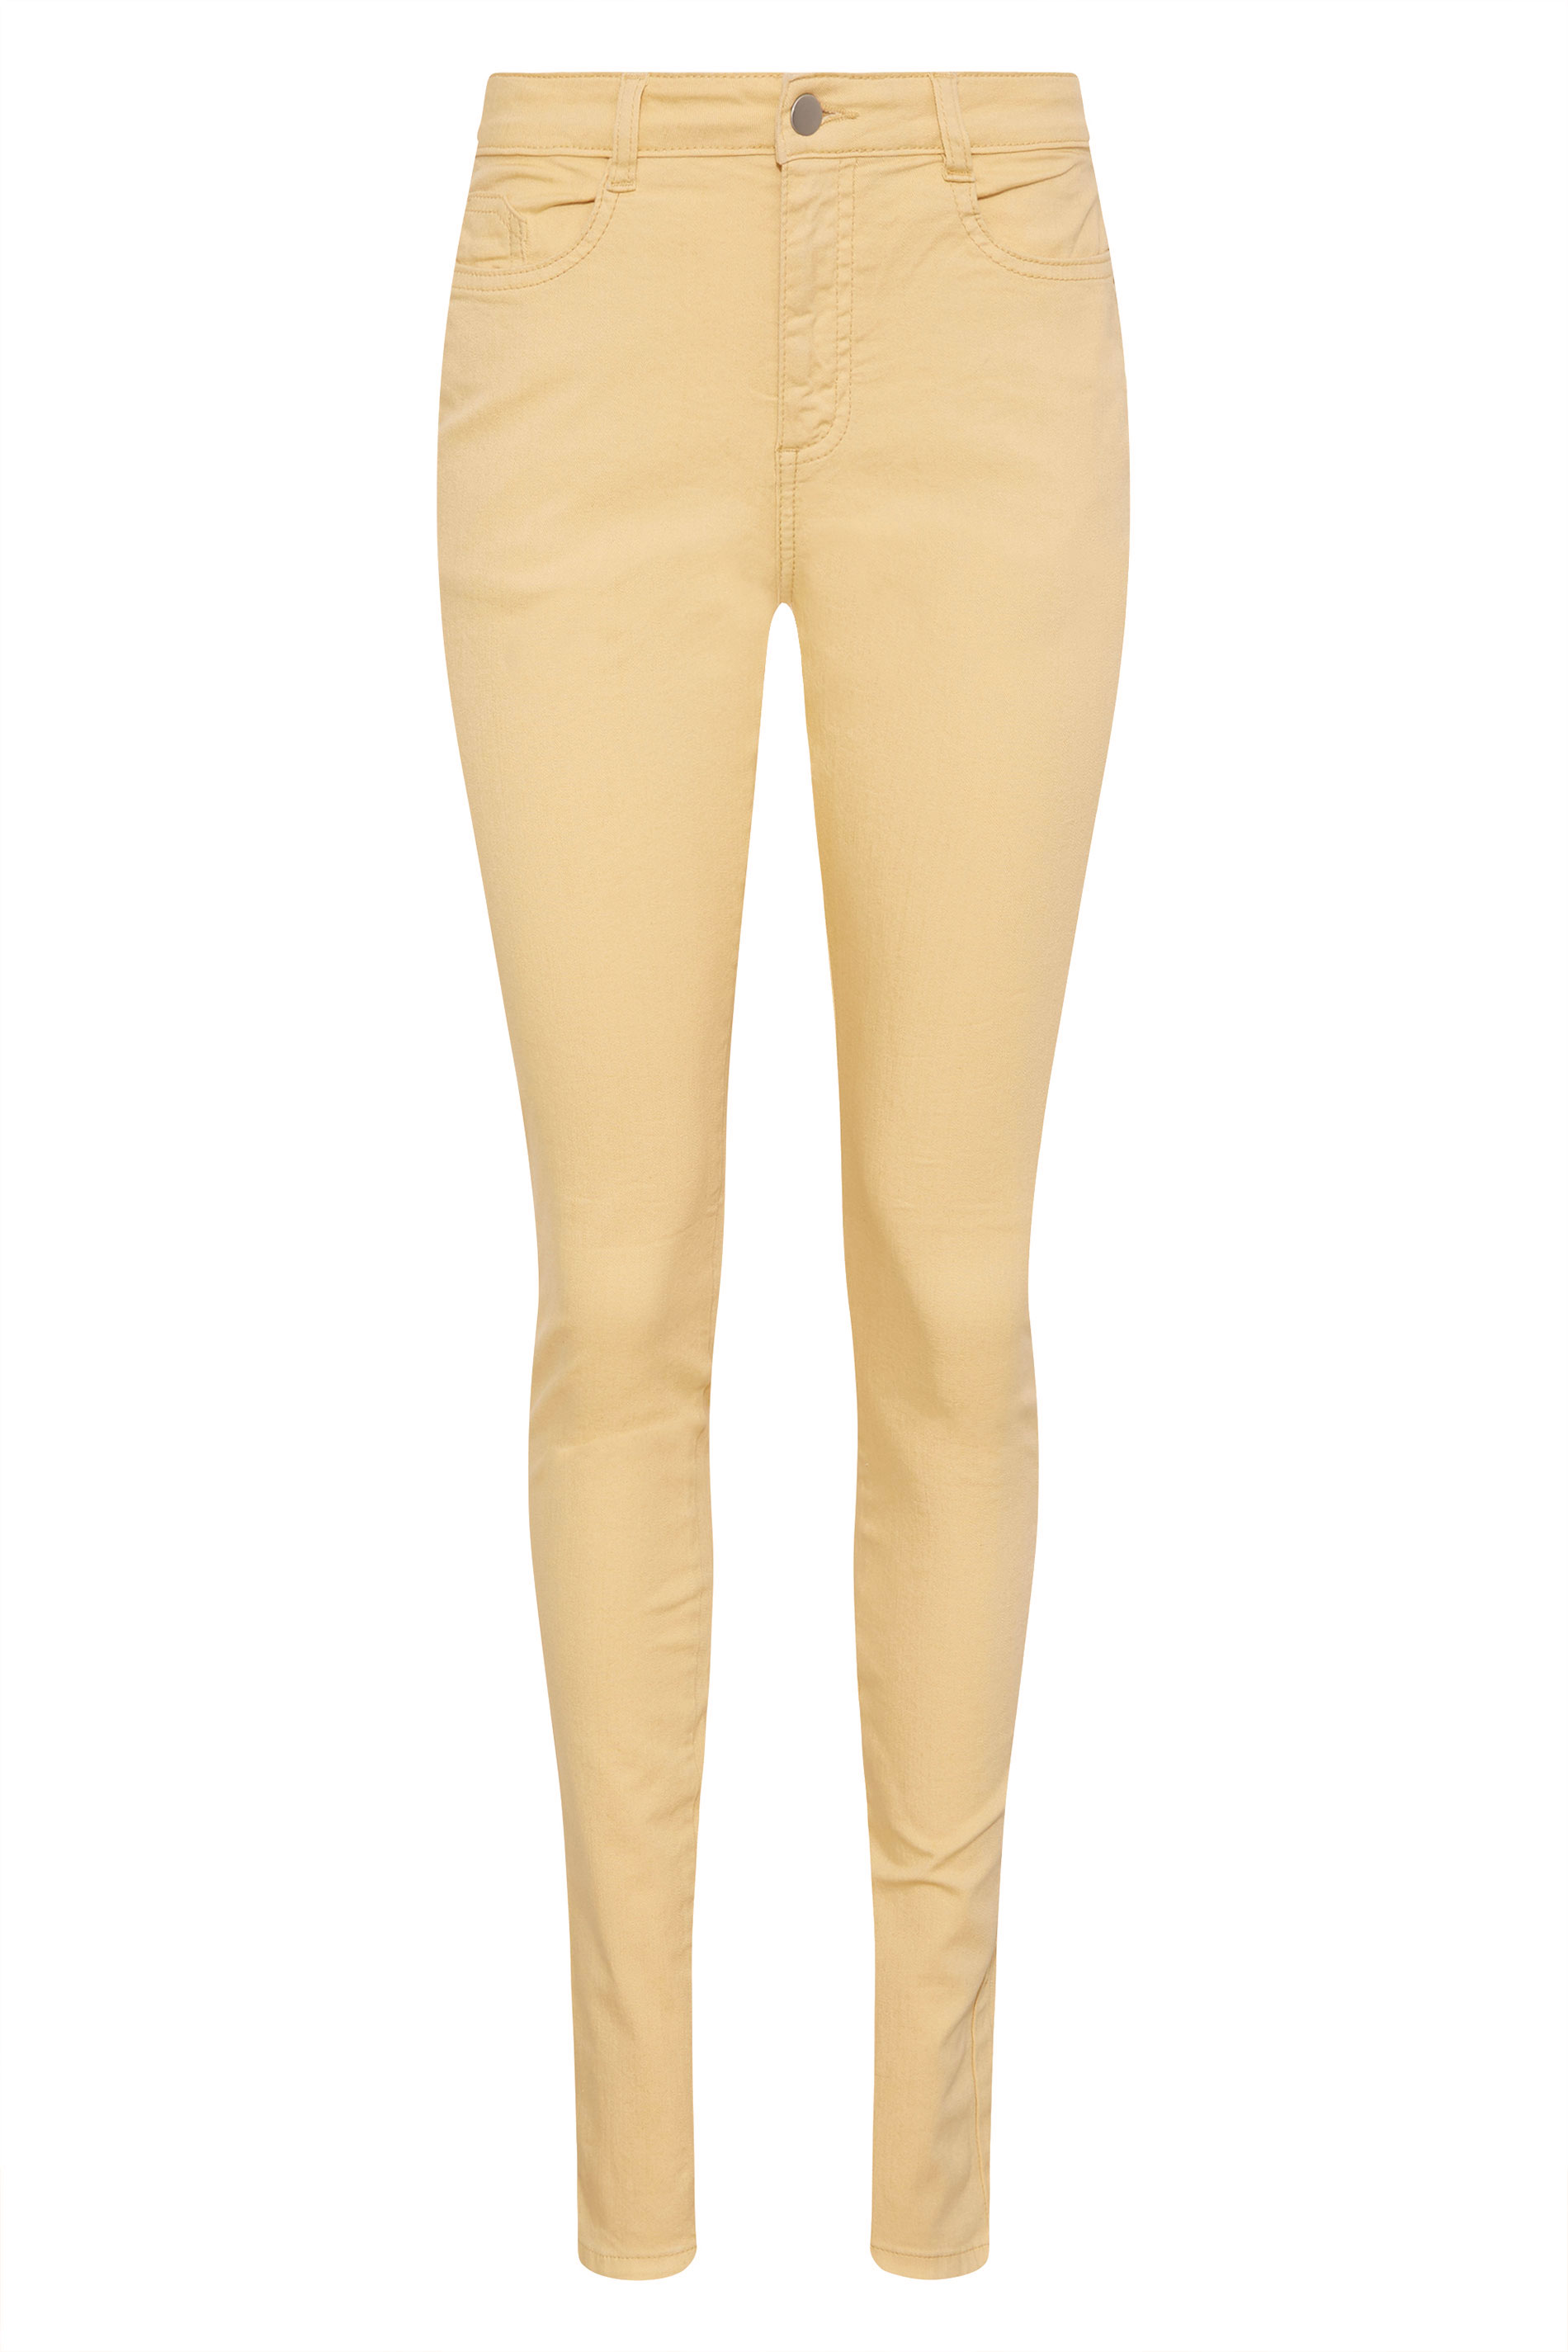 LTS Tall Women's Yellow AVA Skinny Jeans | Long Tall Sally